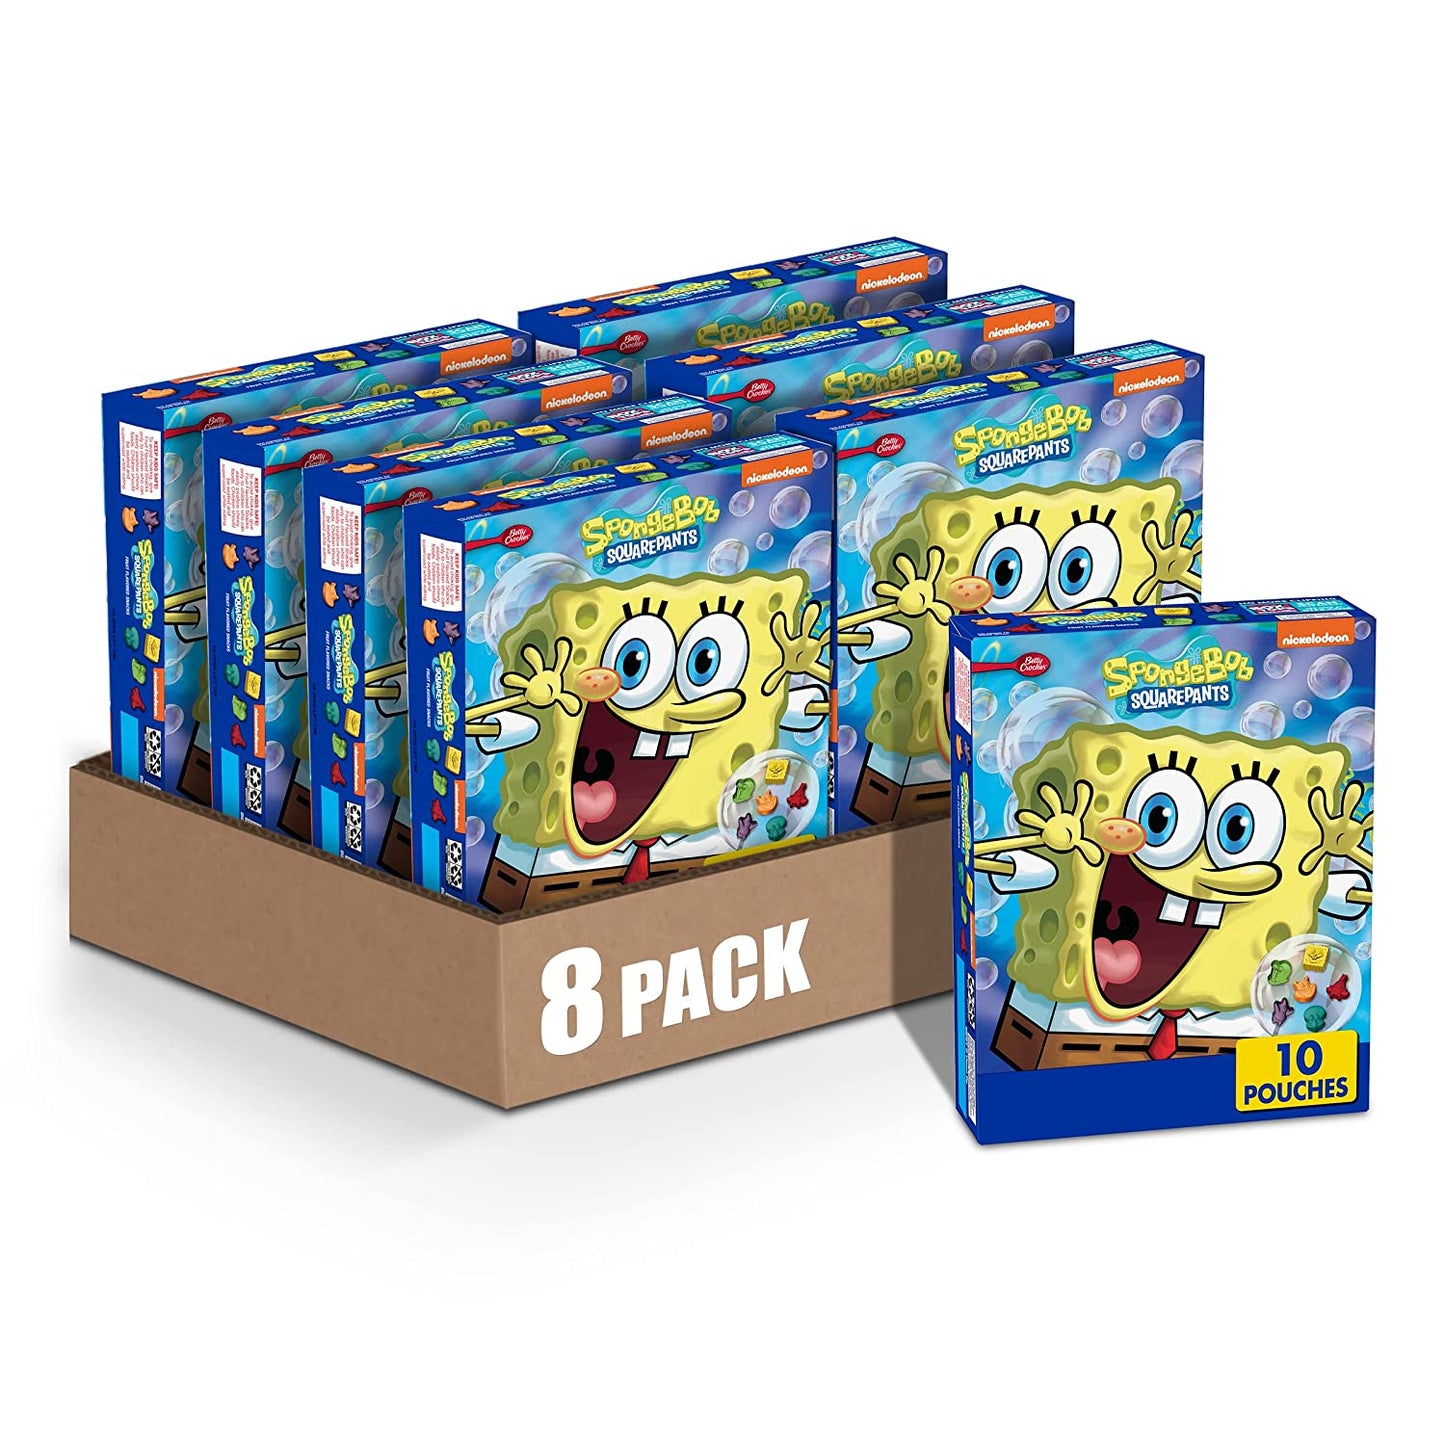 Betty Crocker Fruit Snacks, SpongeBob SquarePants Snacks, 8 oz, 10 ct (Pack of 8)